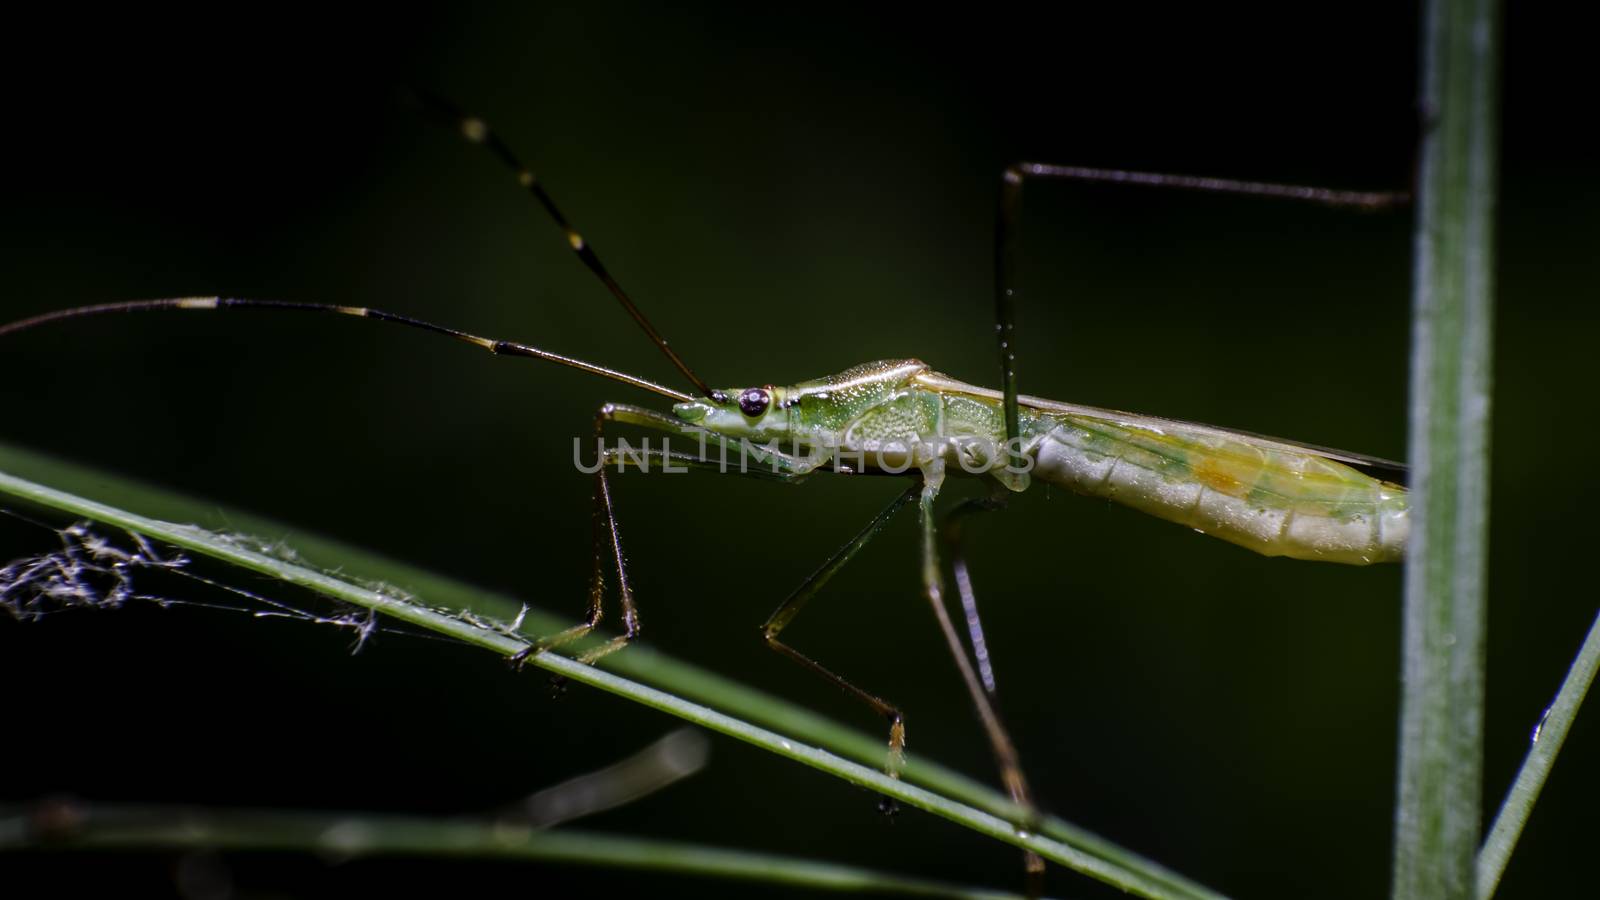 Grasshopper on grass branch by pixbox77